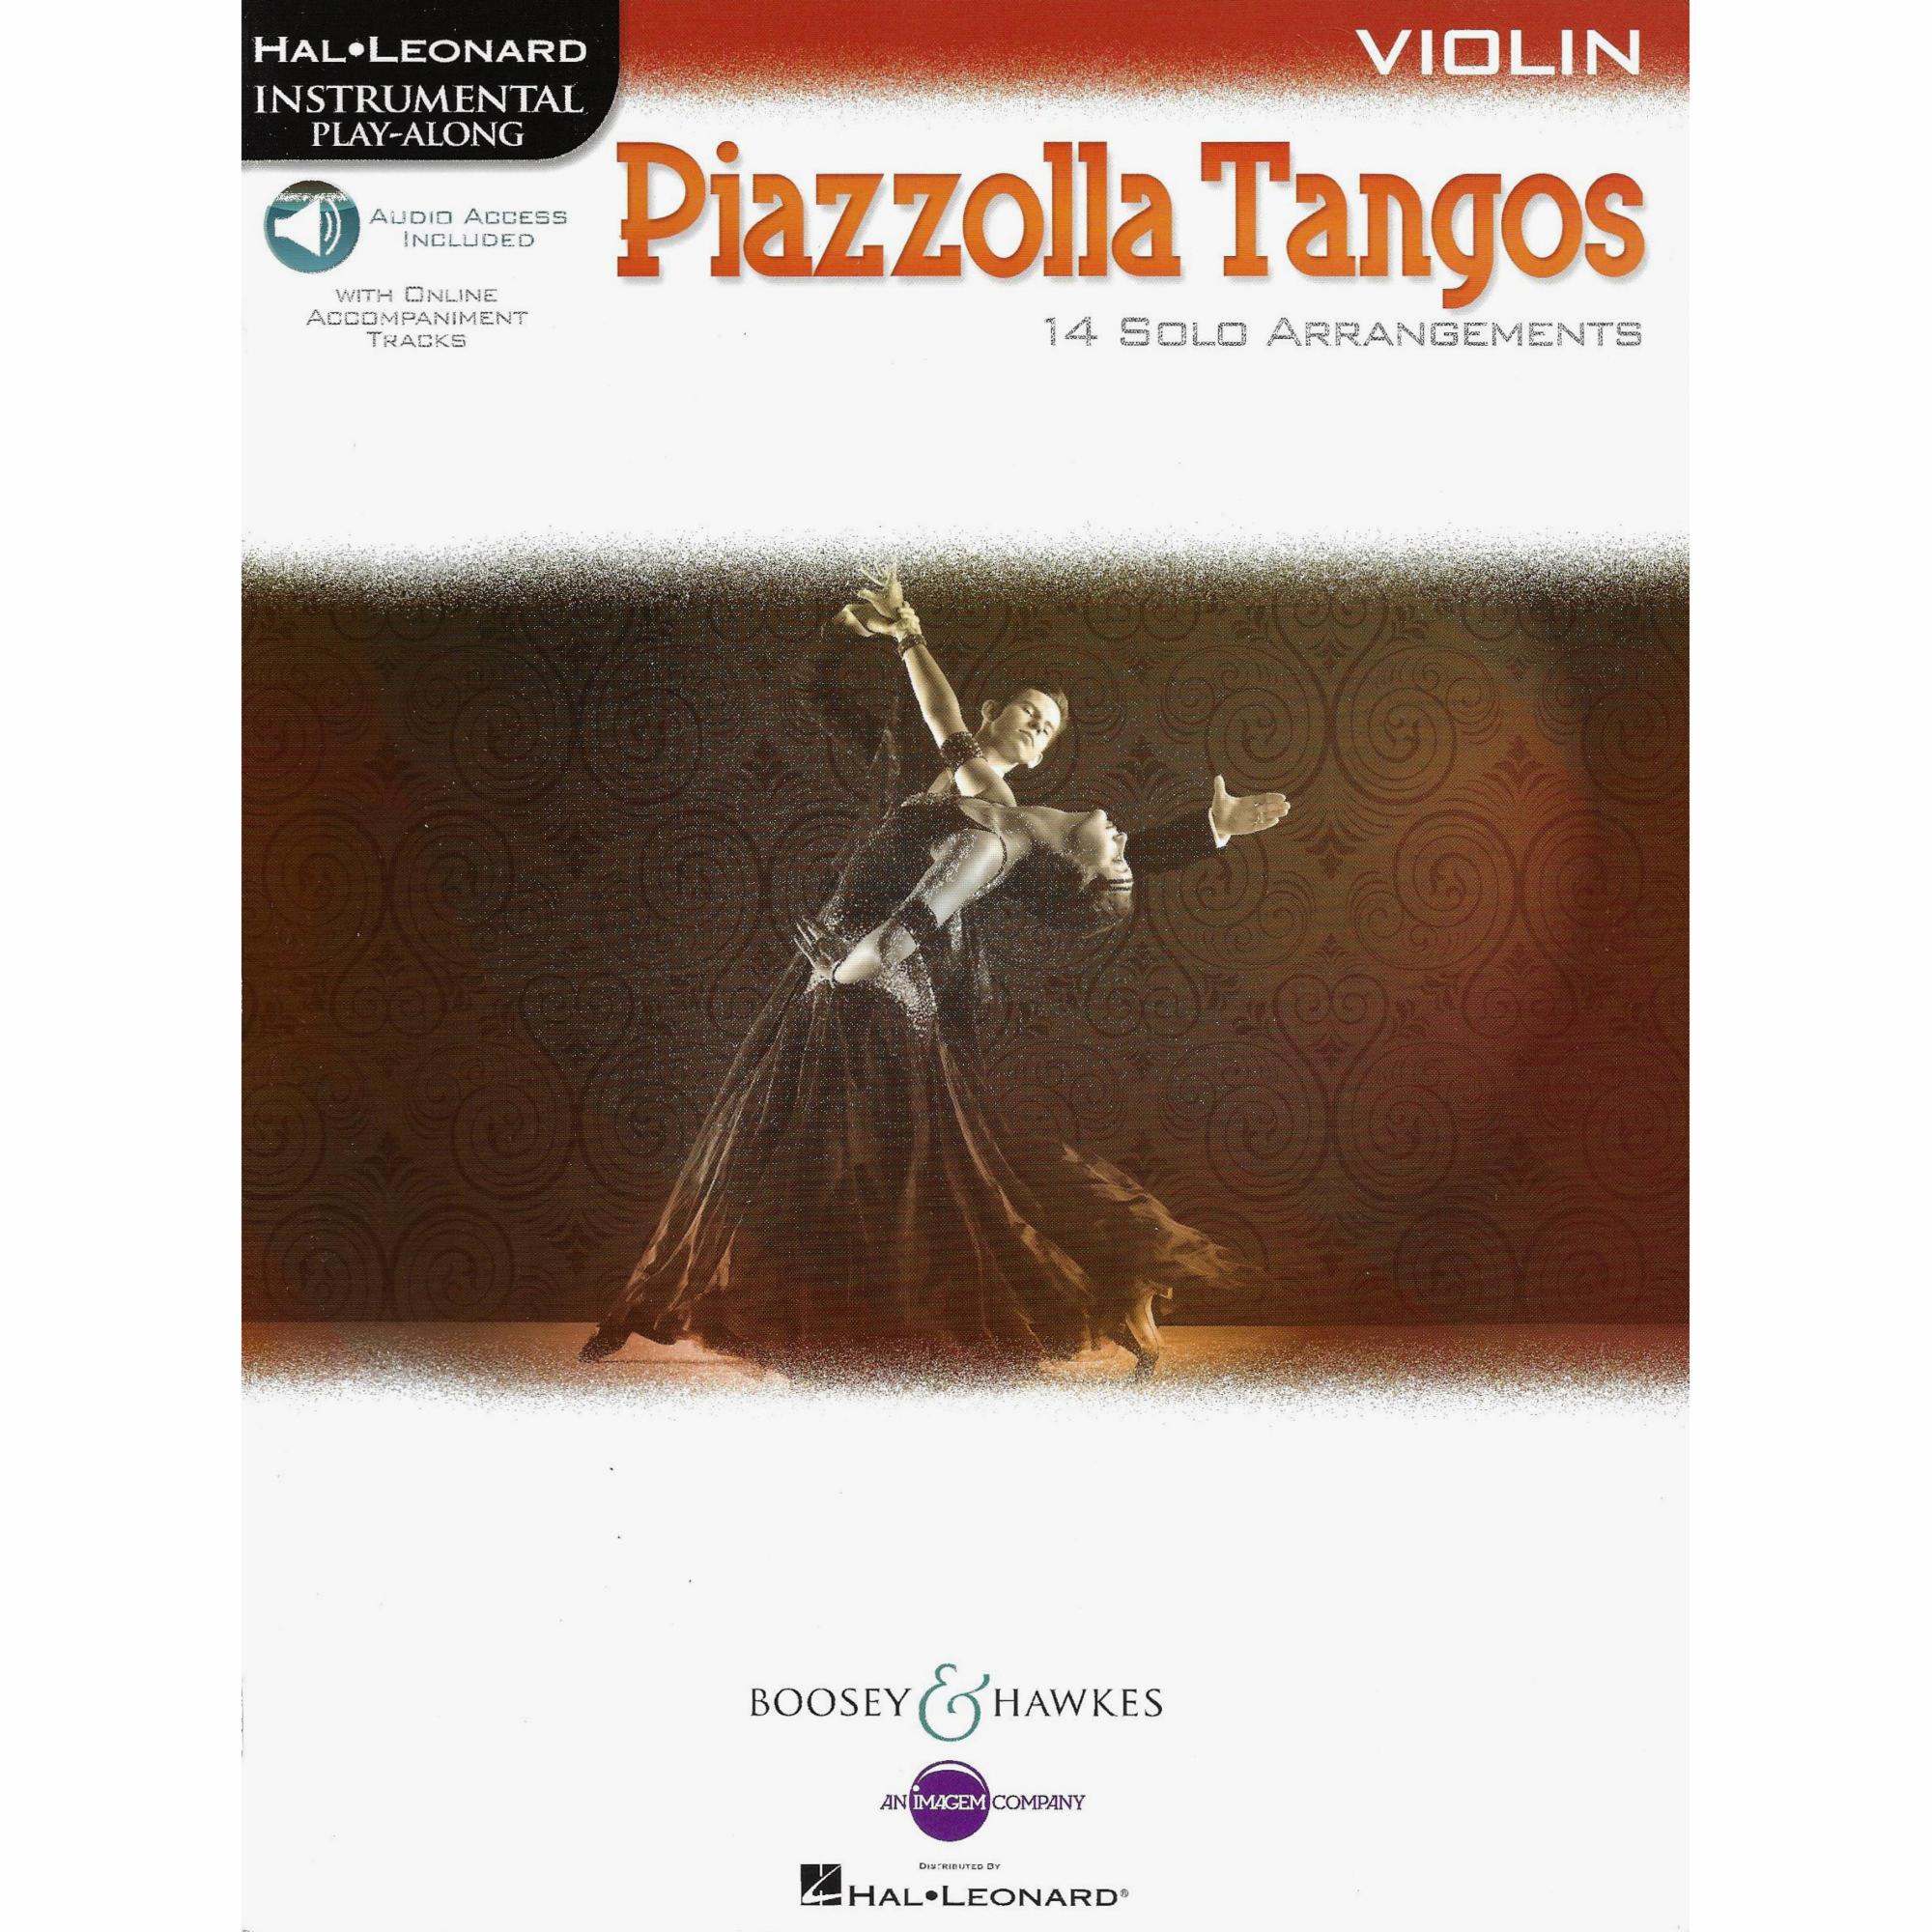 Piazzolla Tangos for Violin, Viola, or Cello